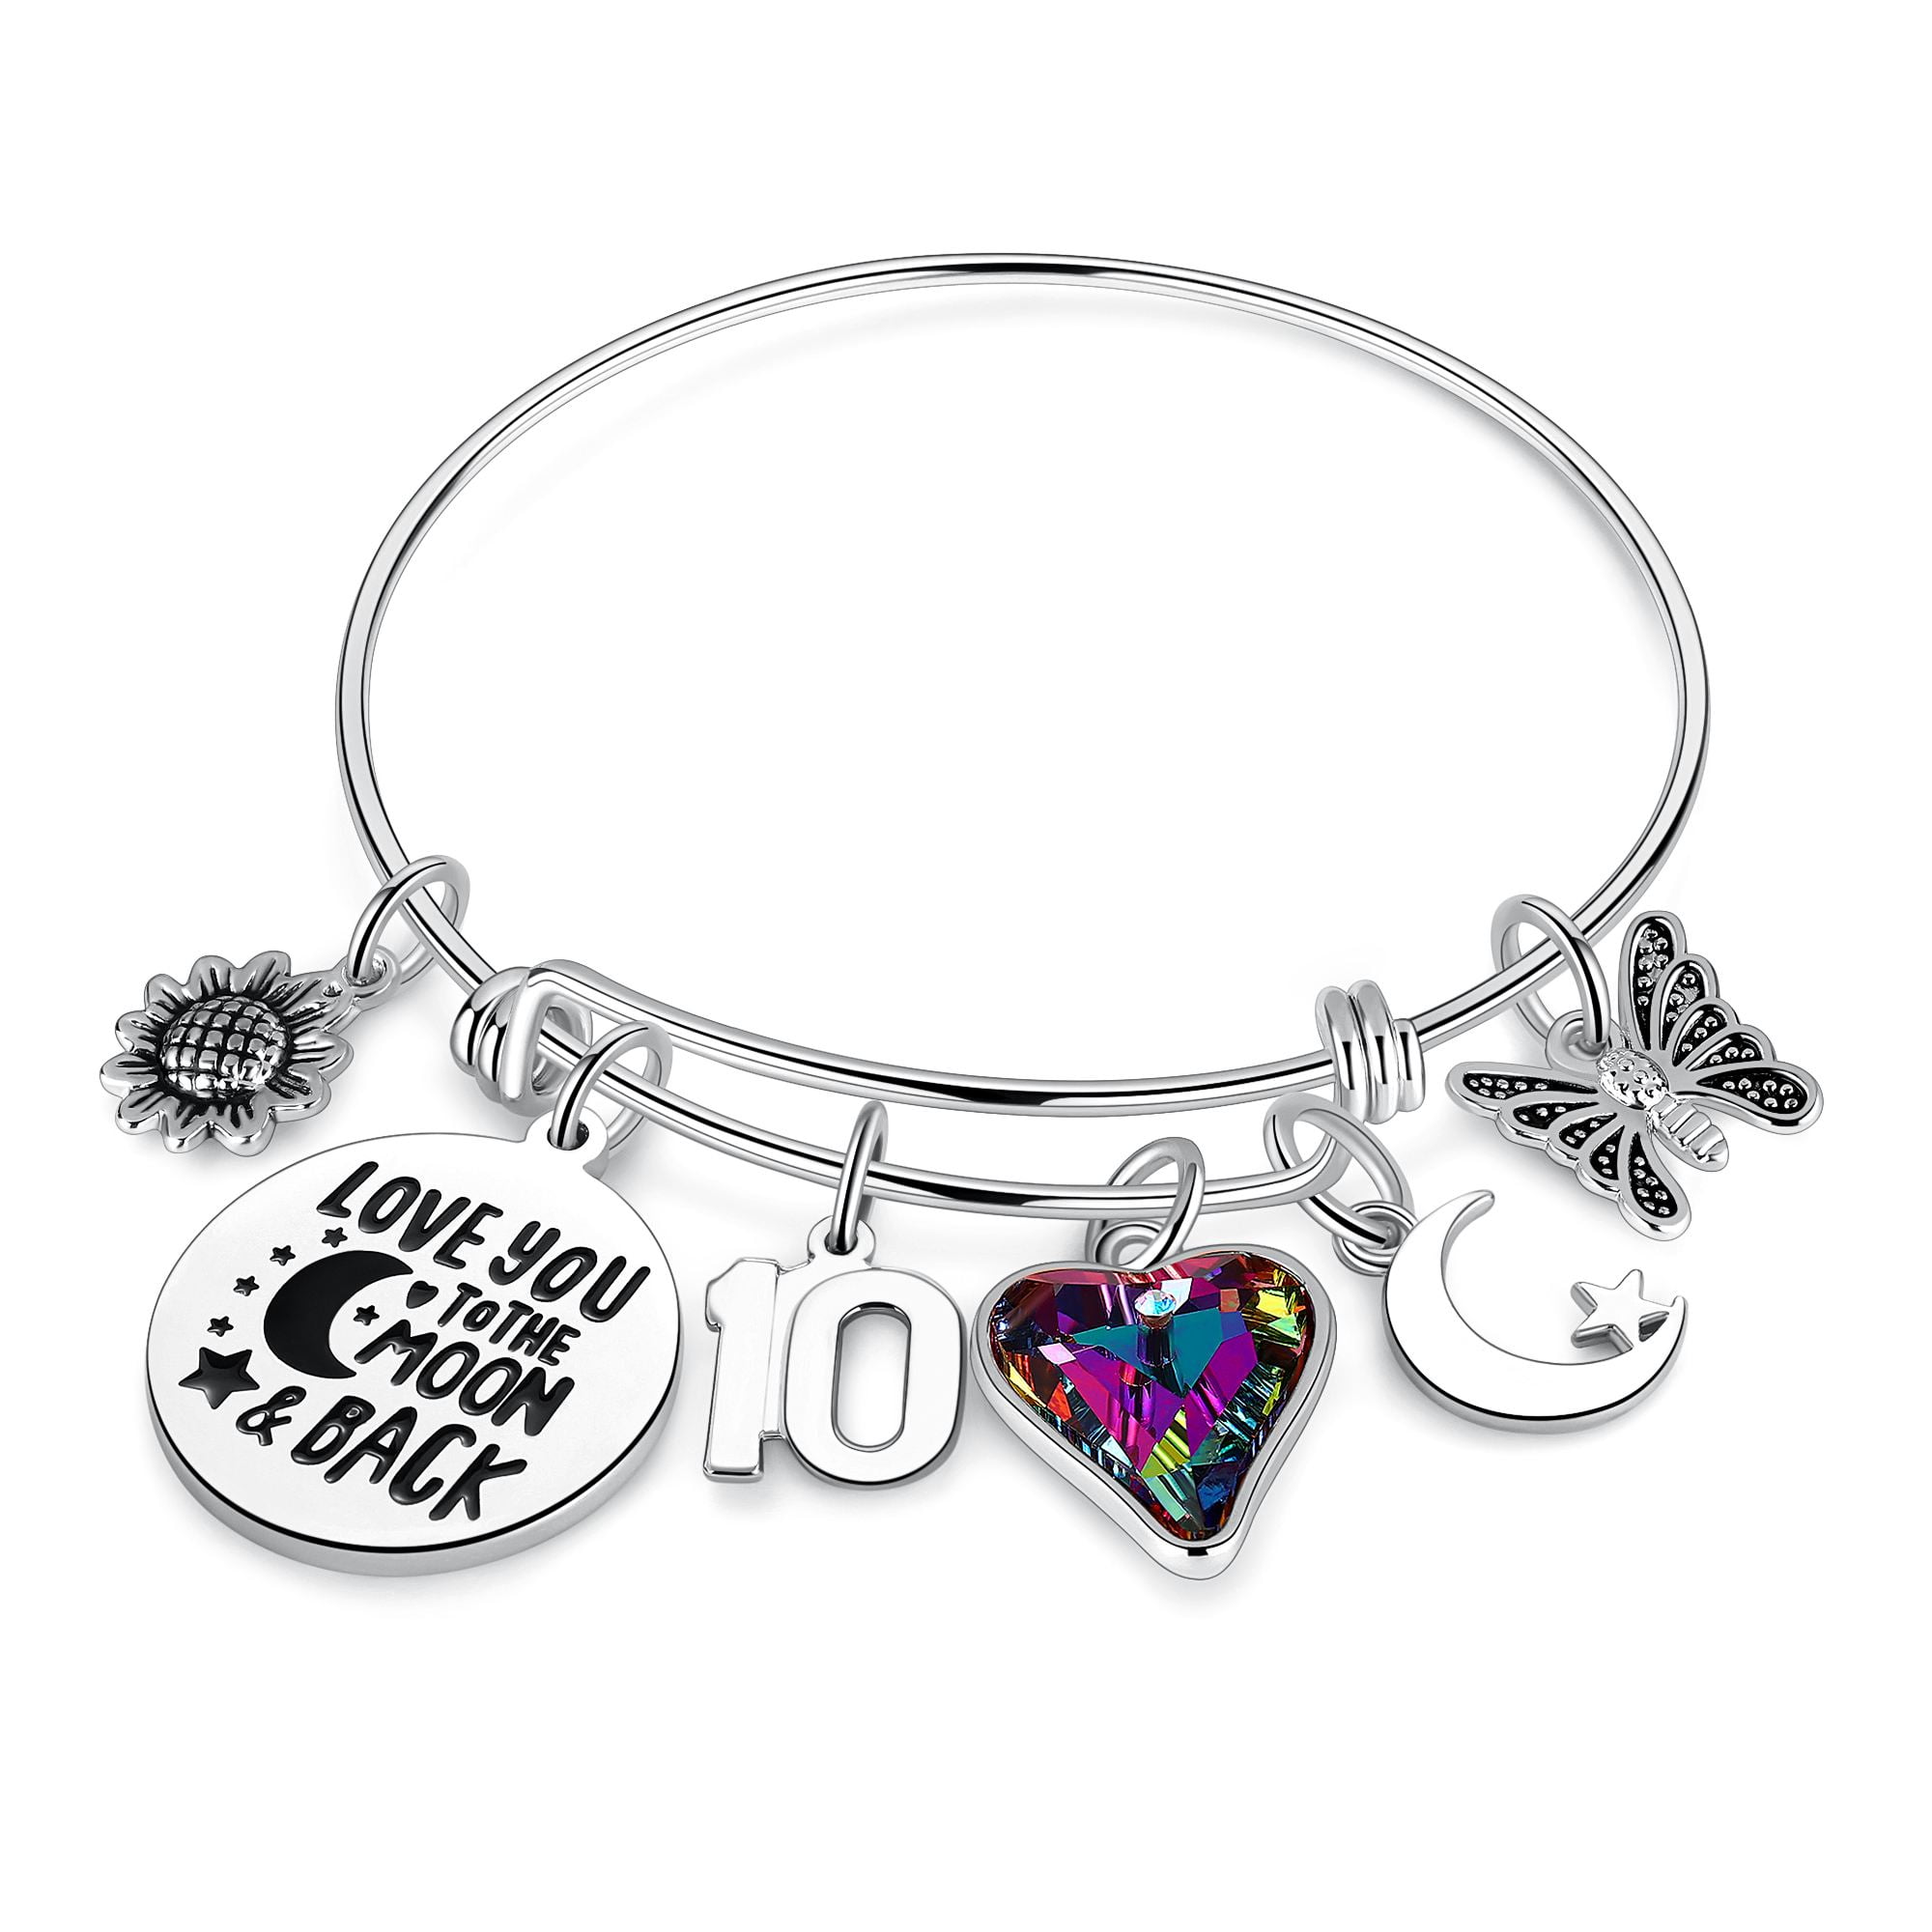 Girls Birthday Starter Charm Bracelet with Gift Box Ages 3rd 4th 5th 6th 7th 8th 9th 10th 11th 12th 13th Birthday Gifts for Girls